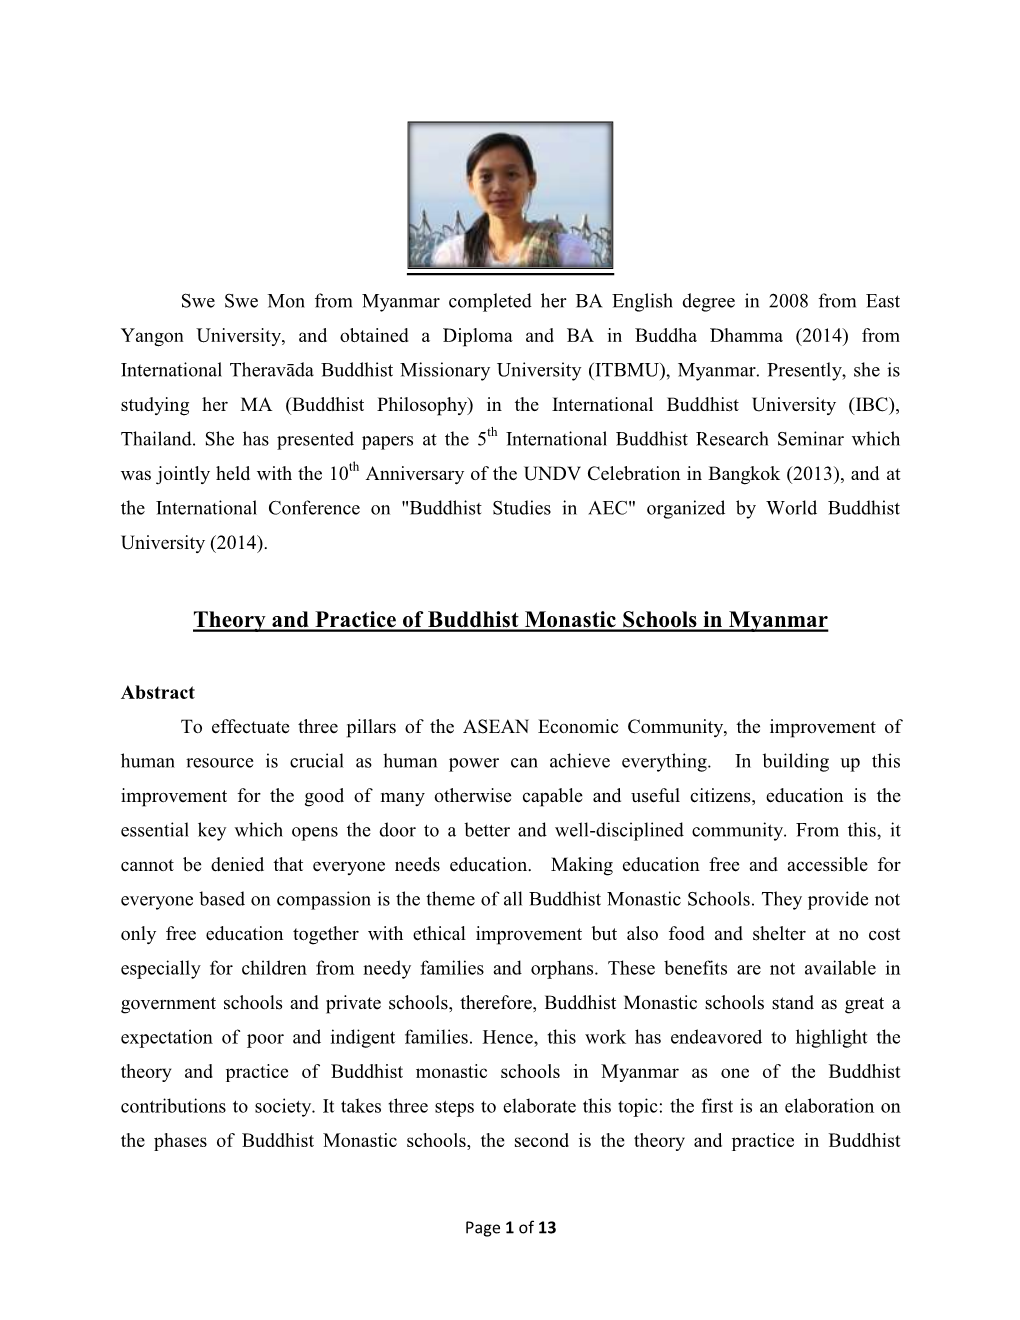 Theory and Practice of Buddhist Monastic Schools in Myanmar